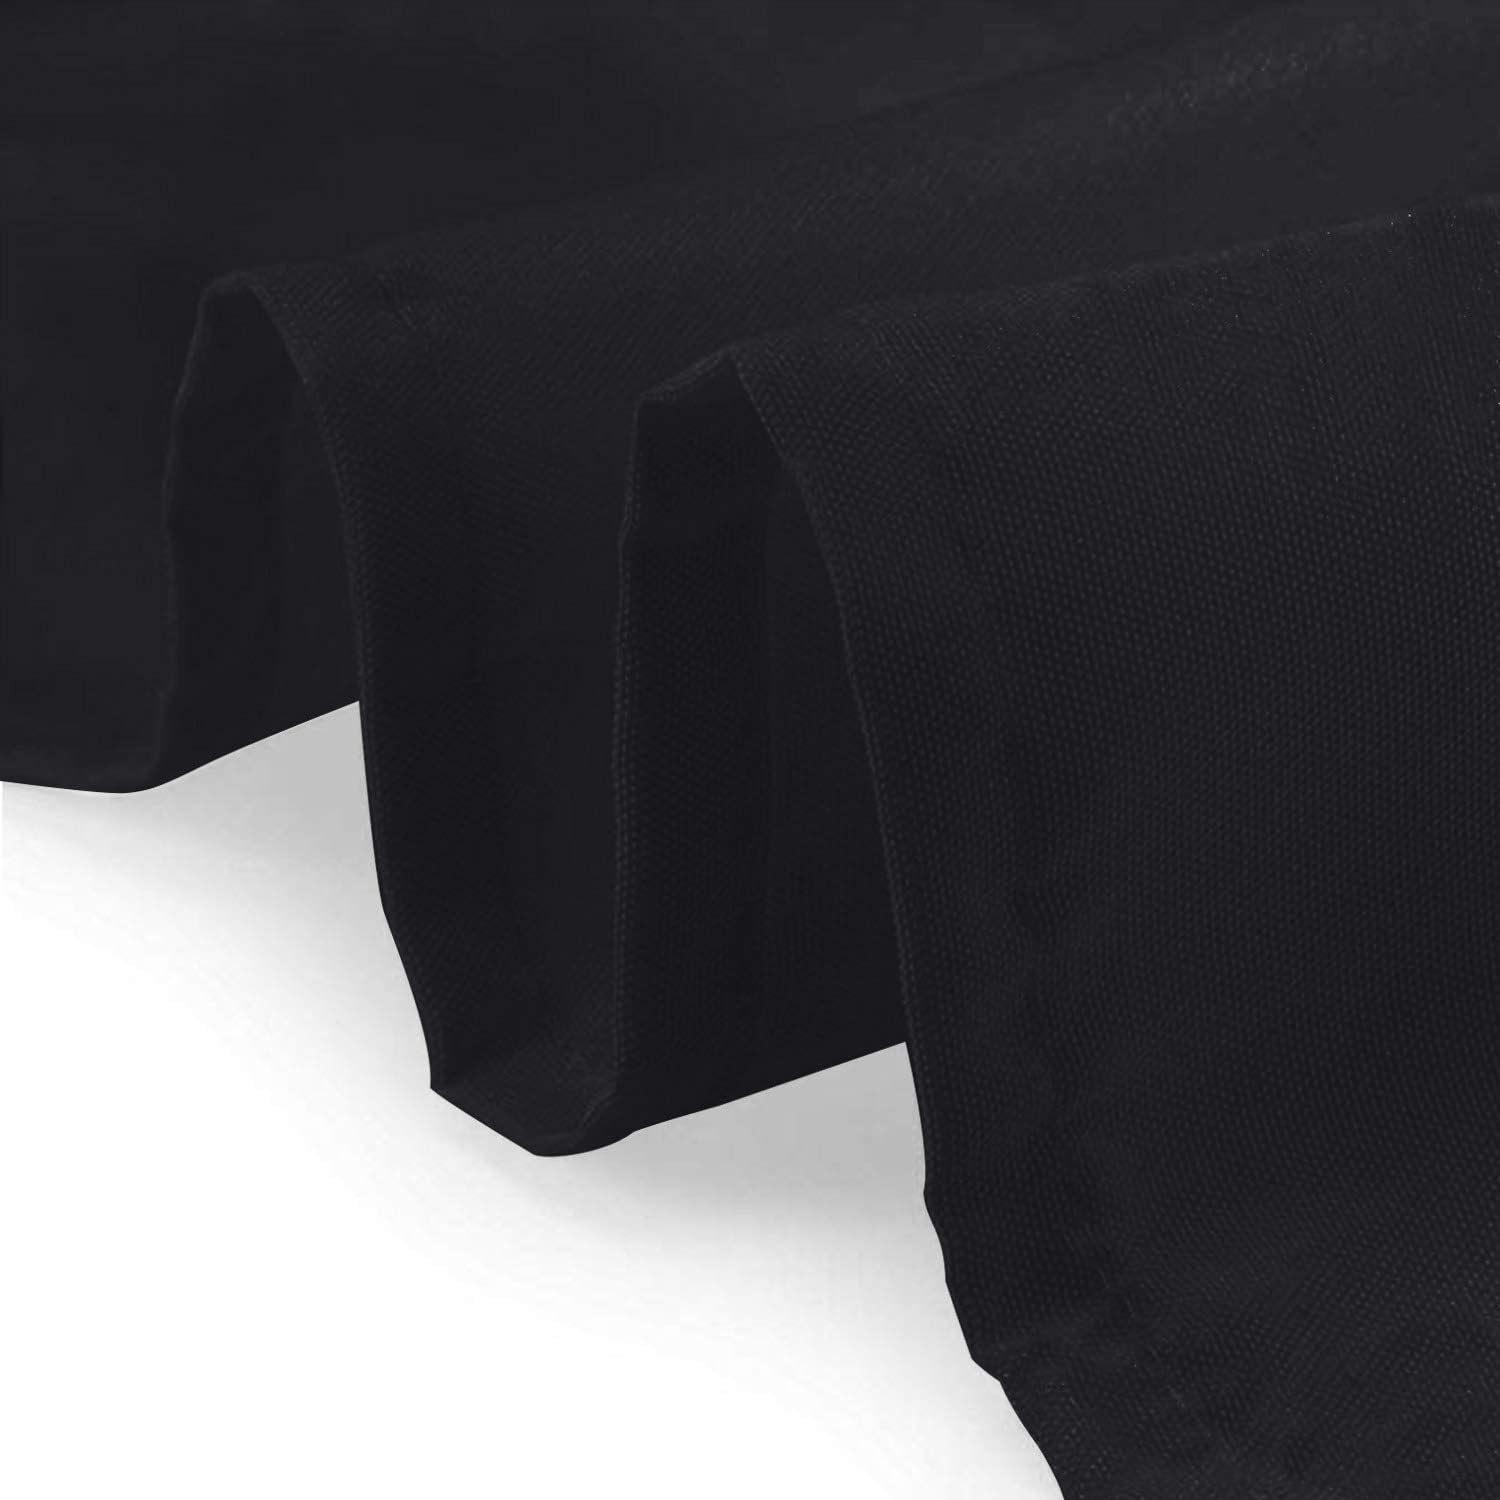 Mantel rectangular de 6 pies para mesa rectangular en poliéster lavable, ideal